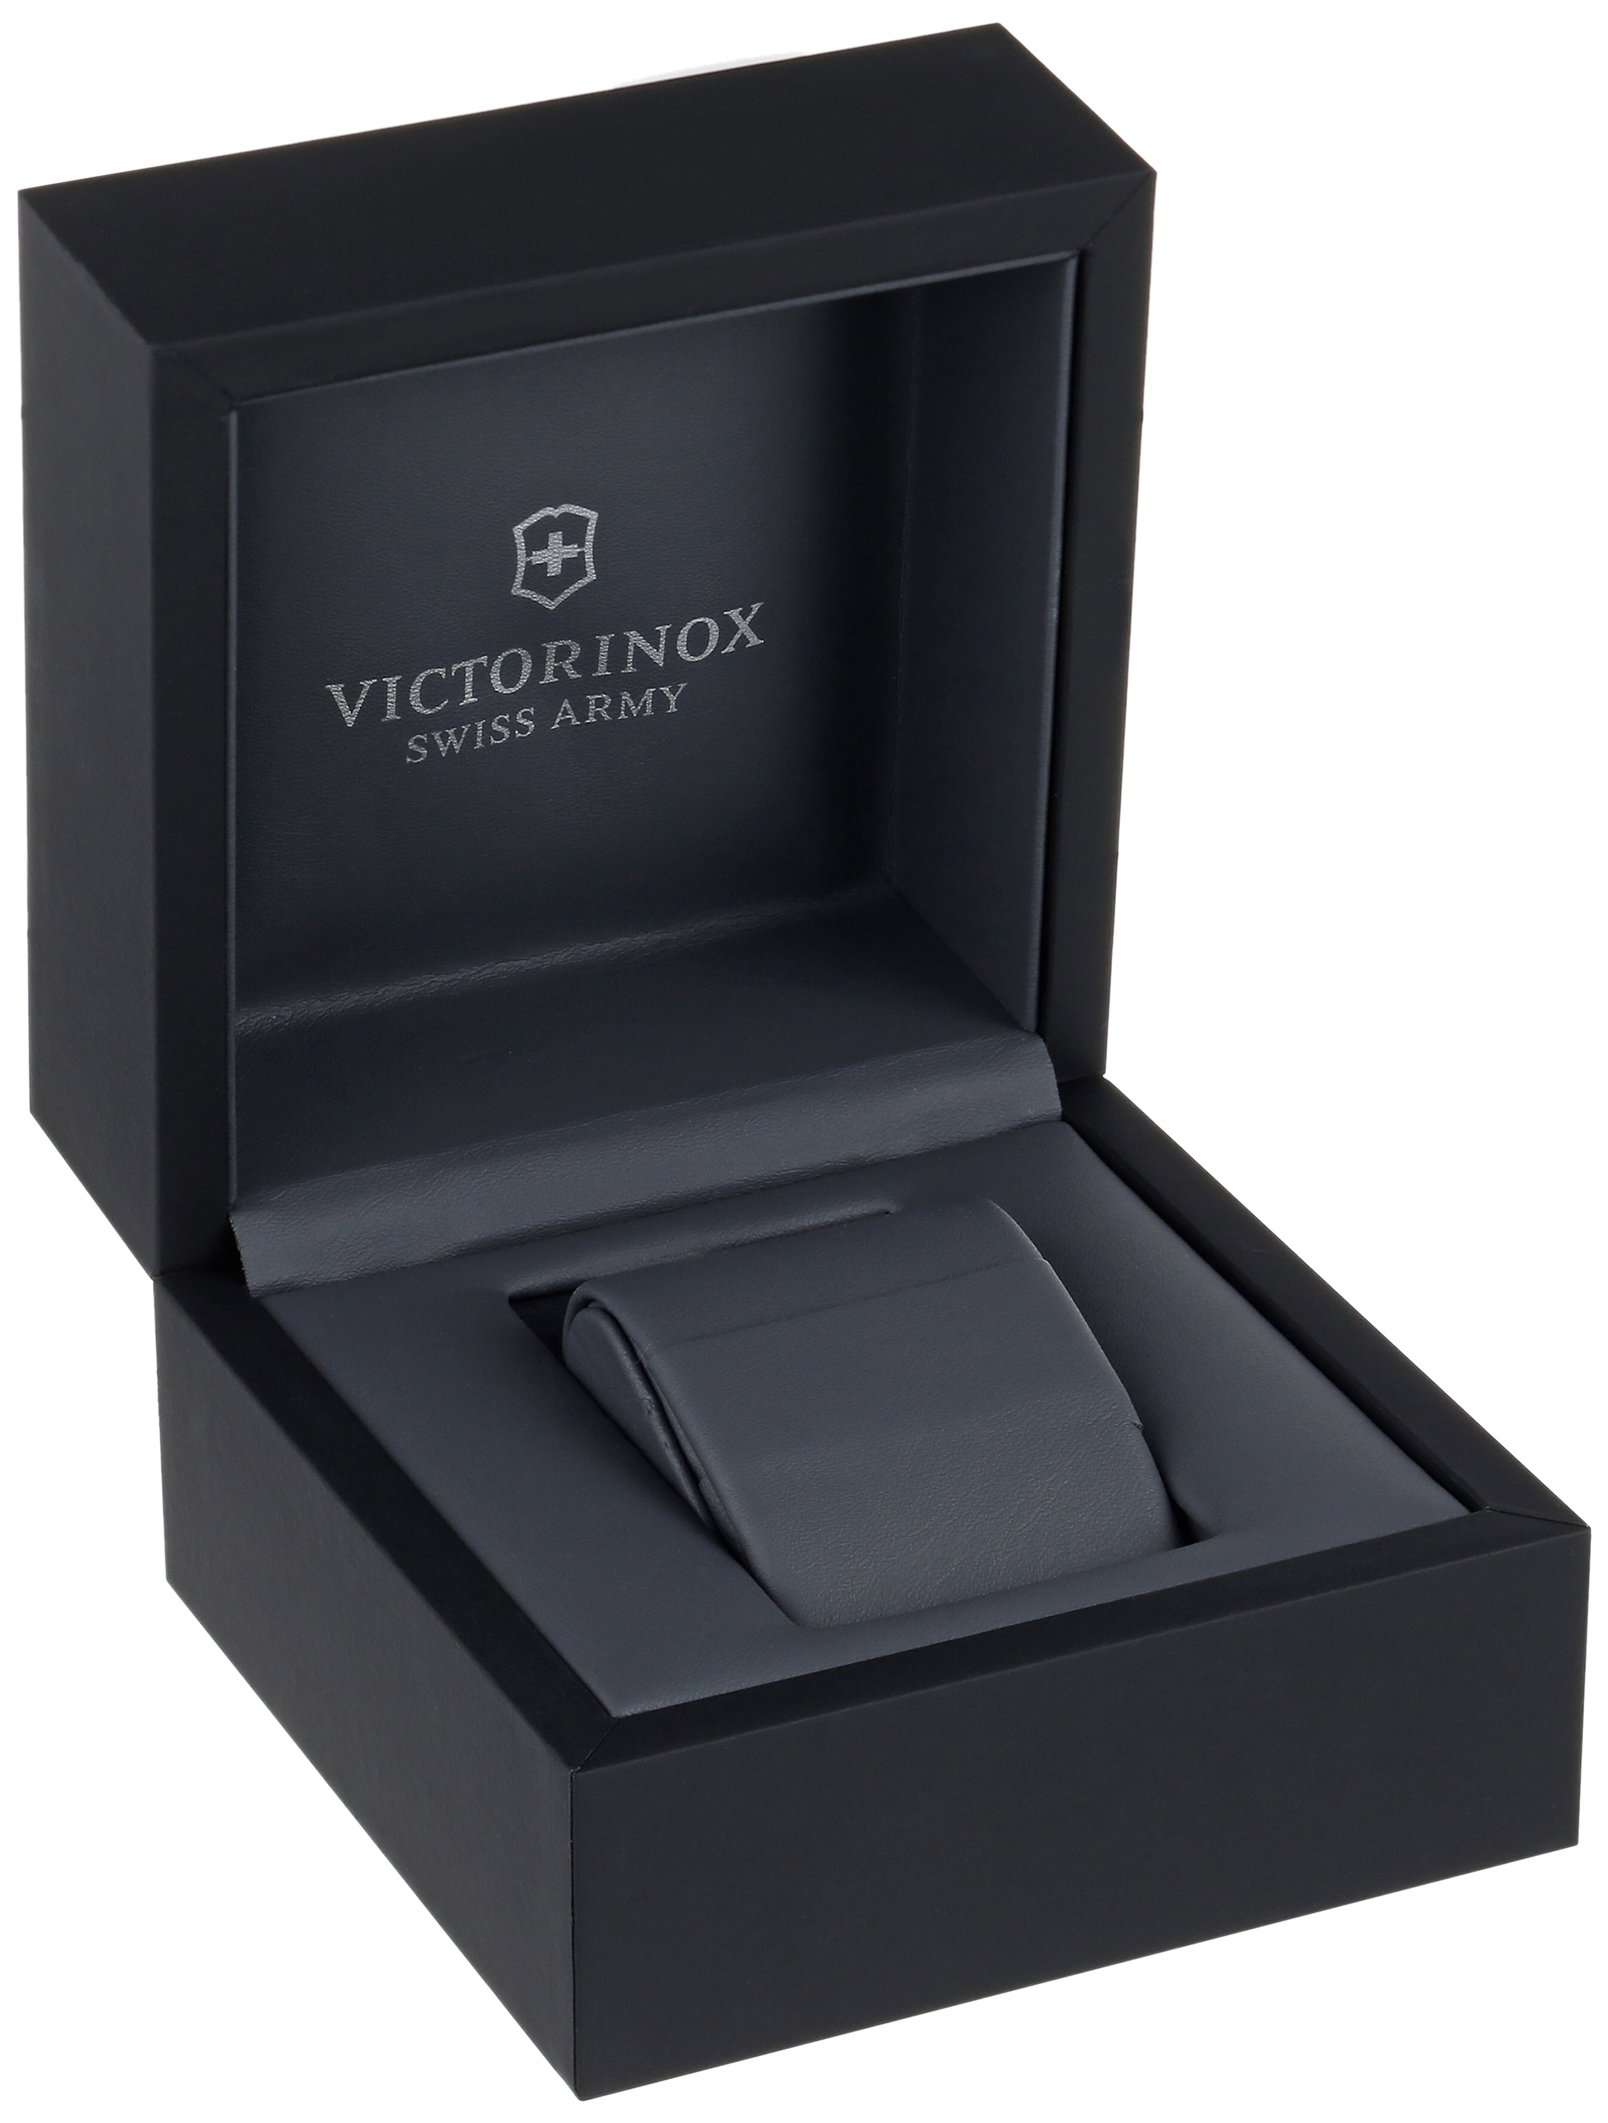 Victorinox Men's Stainless Steel Swiss Quartz Sport Watch with Leather Strap, Black, 21.6 (Model: 241864)